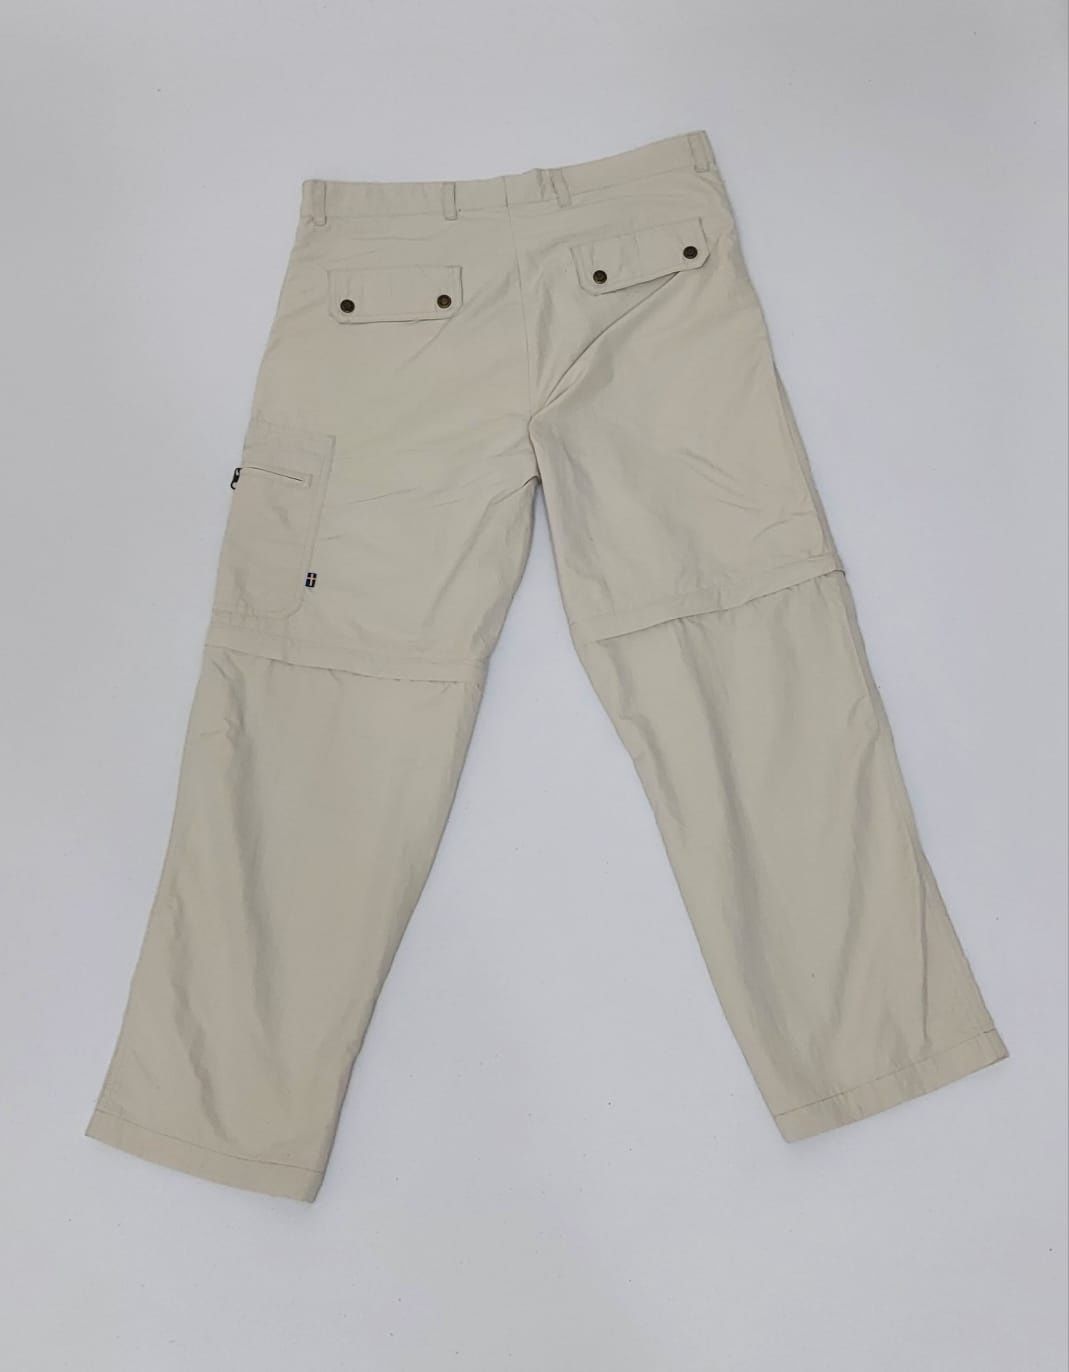 Pantaloni FJALLRAVEN G1000, 2 în 1, nr 52 & 54 EU, munte, vânătoare